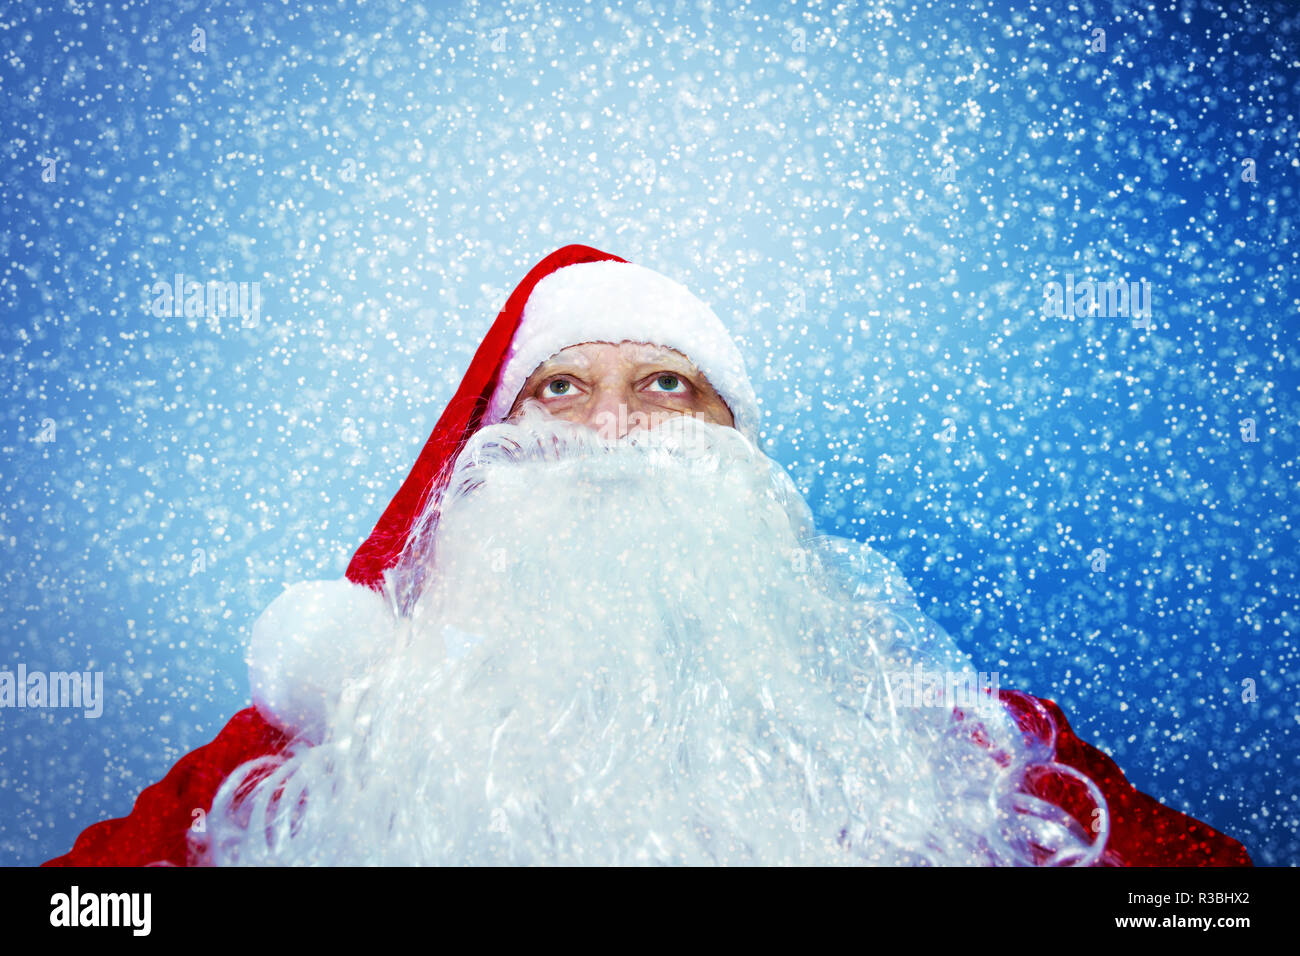 Santa Claus in the snow Stock Photo